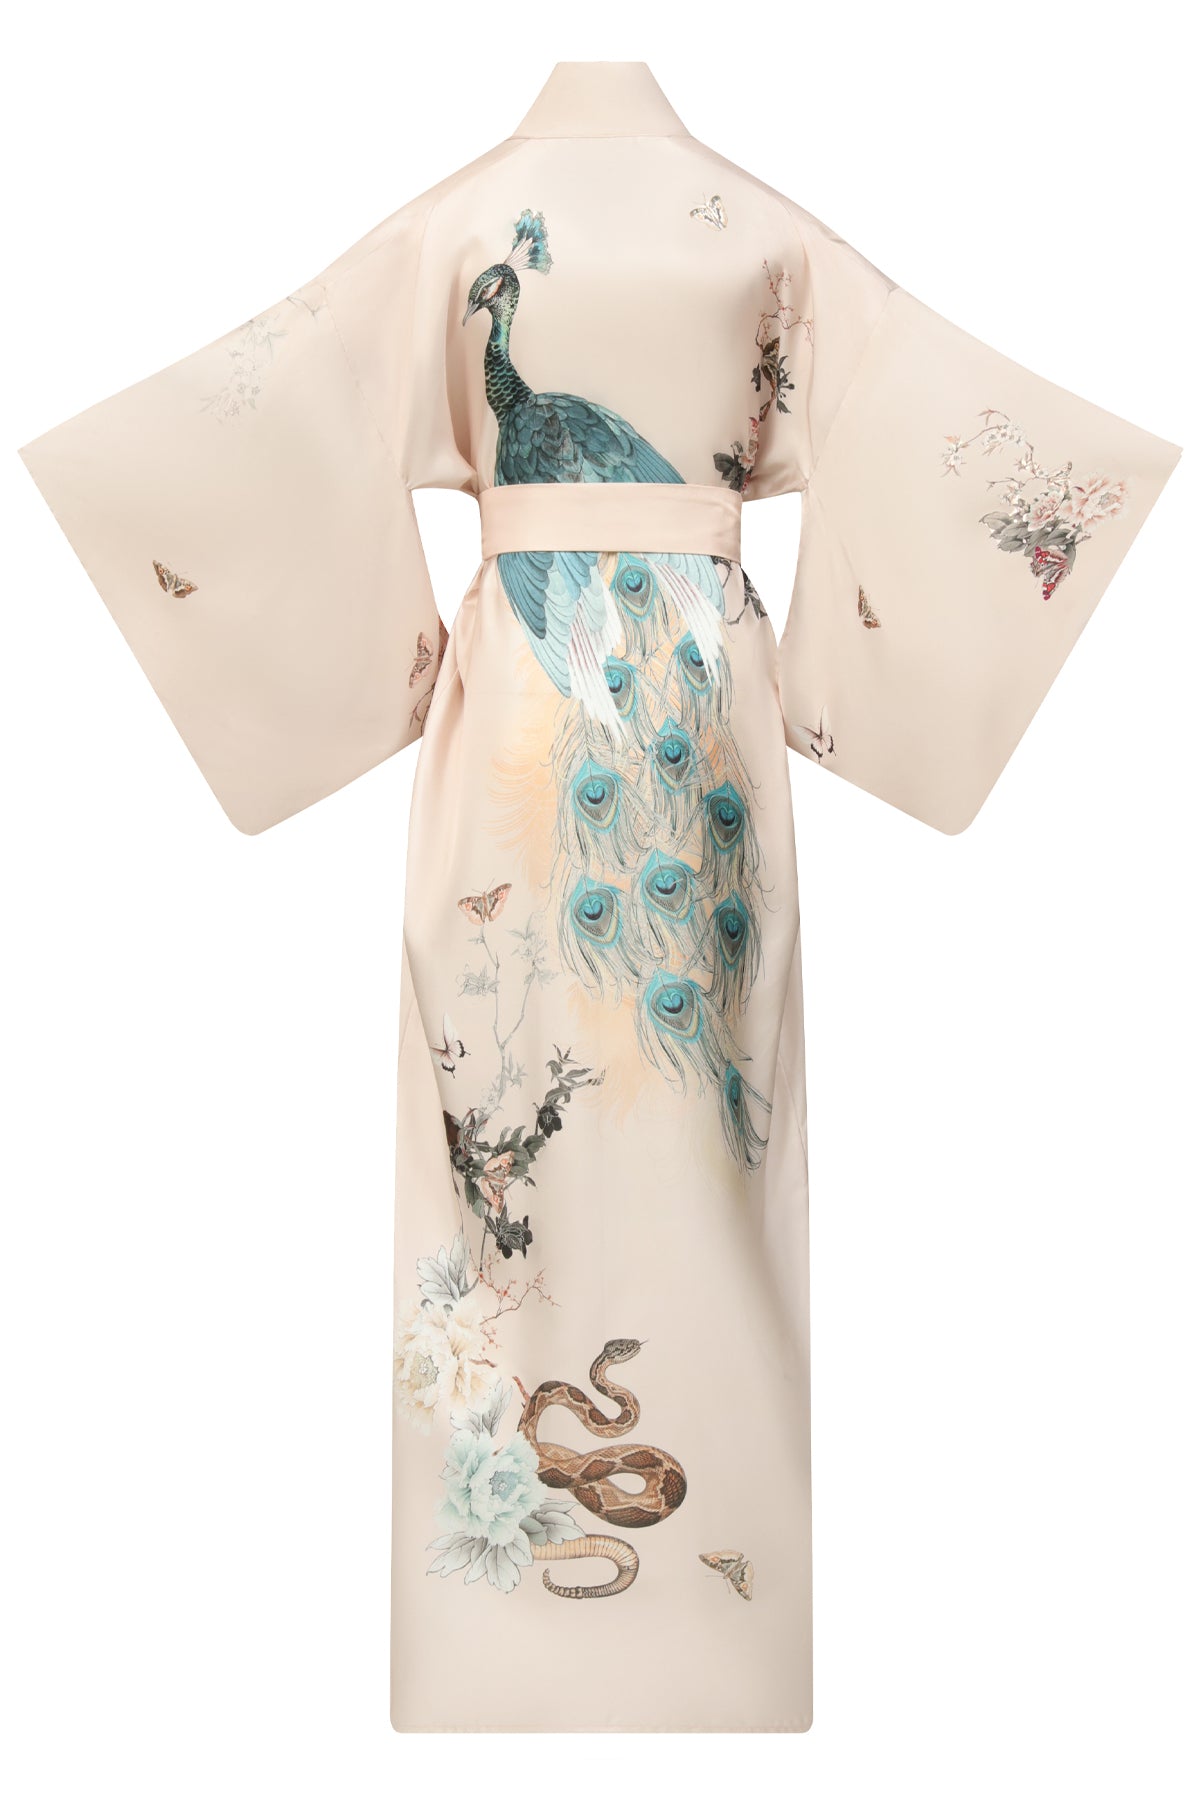 Silk Kimono Dressing Gown Royal Peacock | Pink